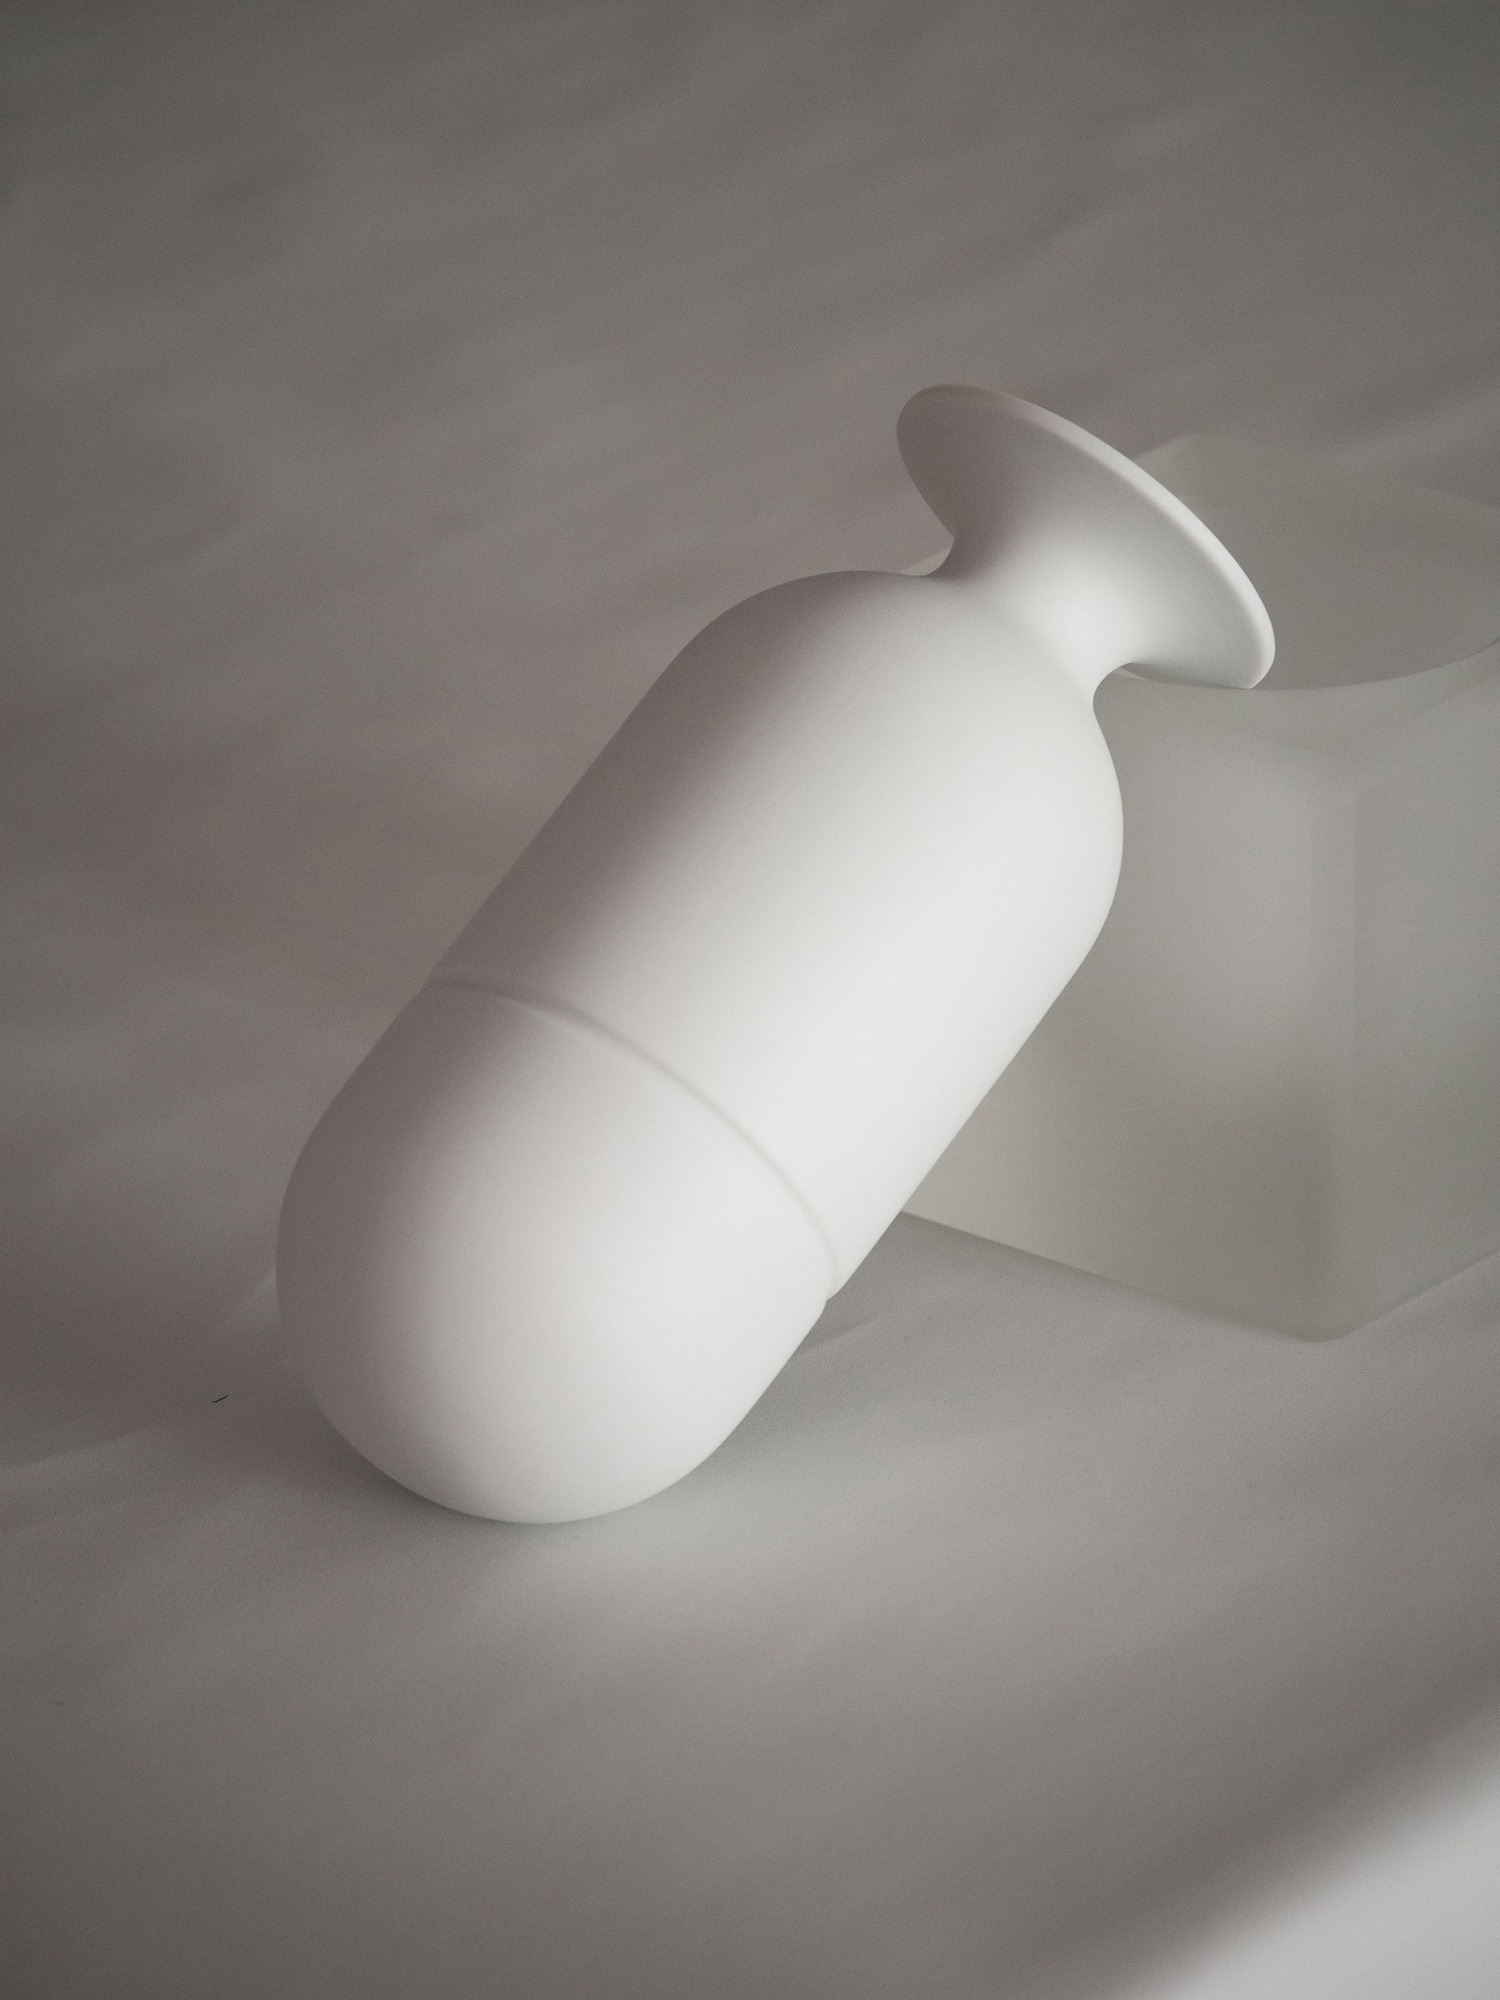 Freddo vase in white for Rosenthal, designed by Debiasi Sandri